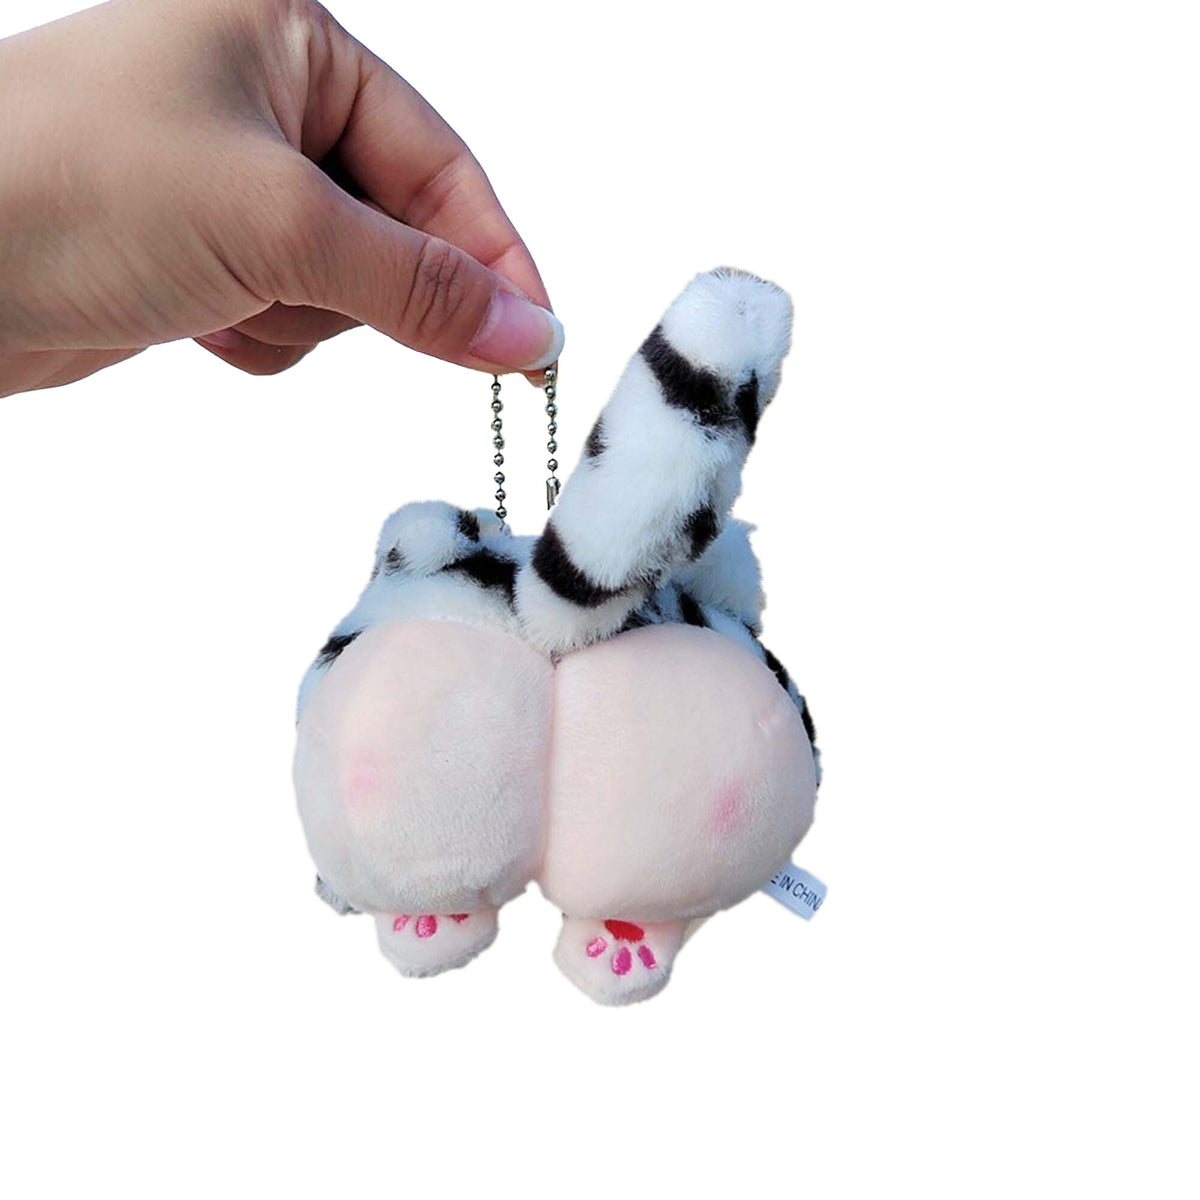 Shenzhen Huiboxin Electronics Co. Ltd Impulse Buying Cute Animal Bum Bum Plush Keychain, White and Black Cat, 1 Count 810120713274